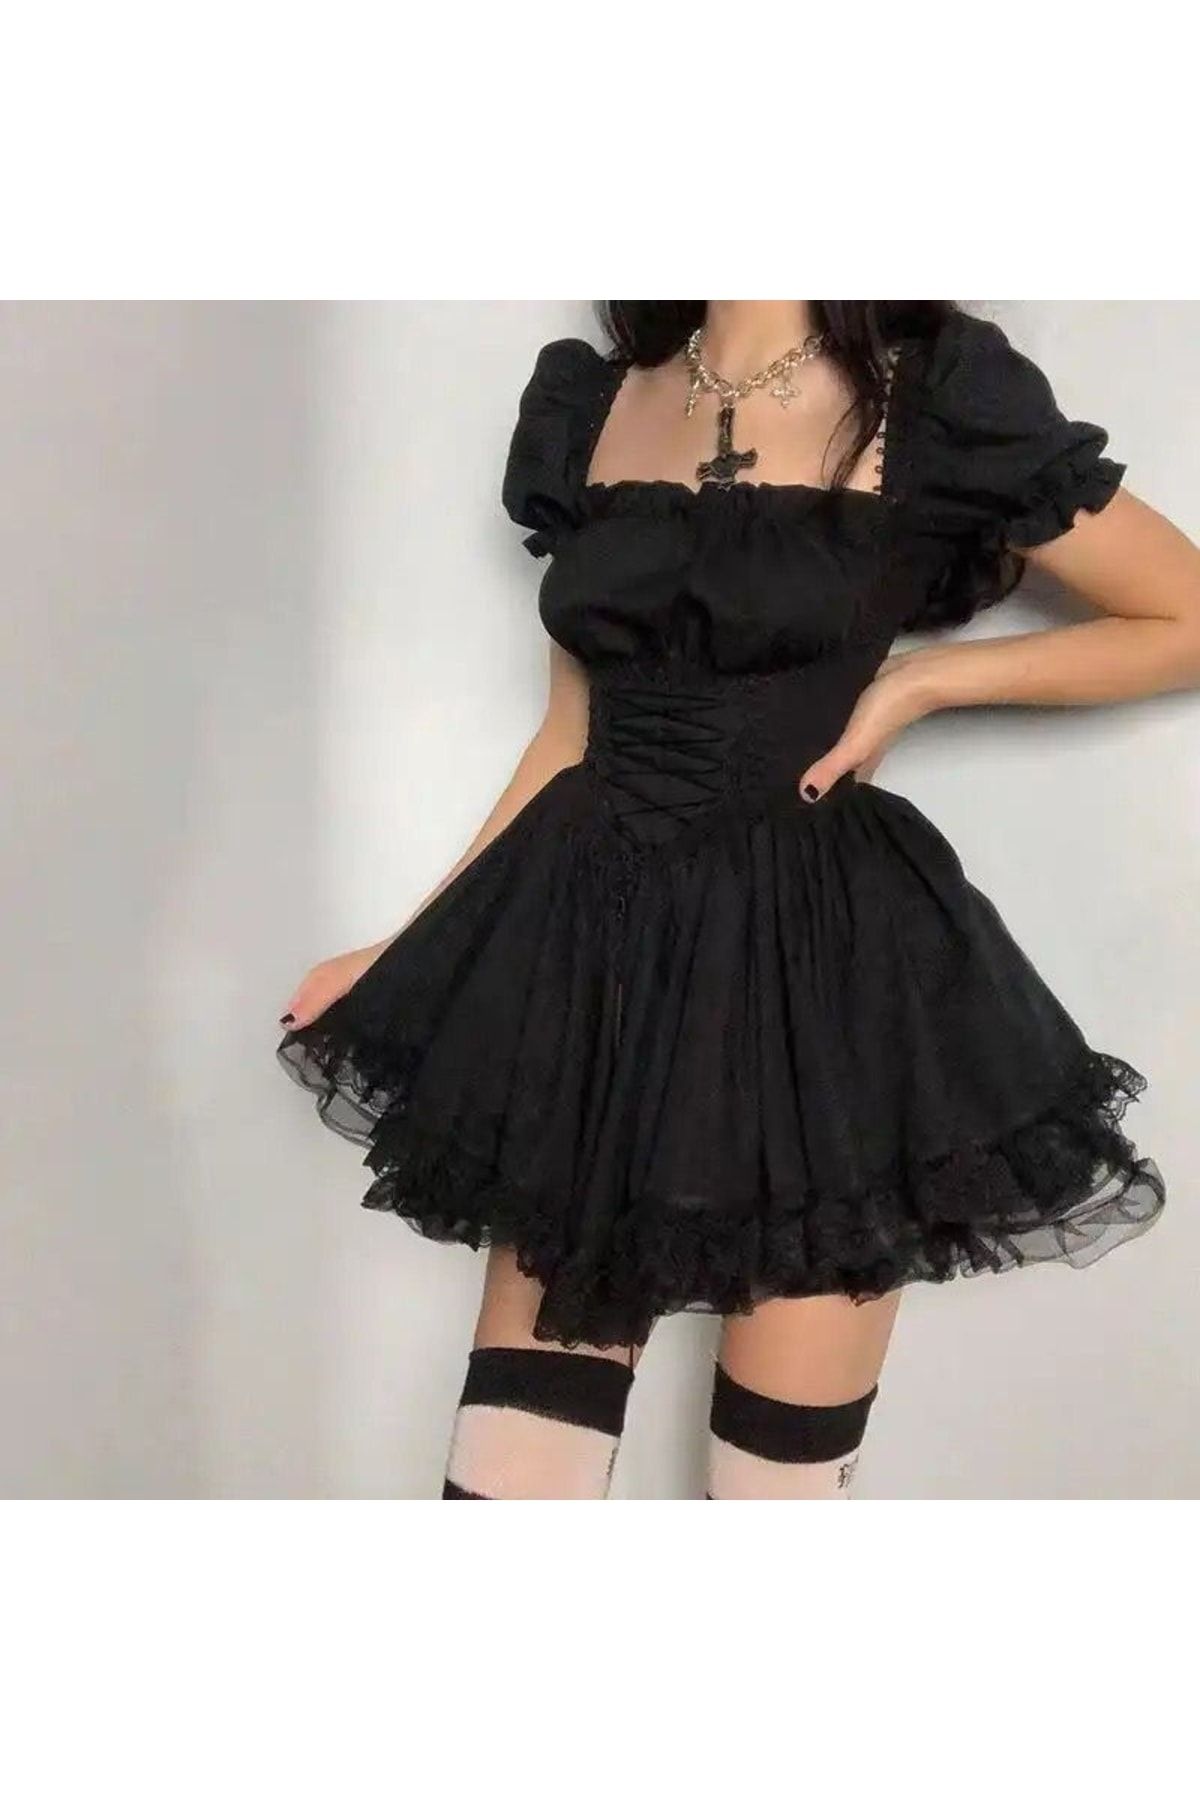 Köstebek Gothic Kısa Kollu Dantel Detay Mini Elbise